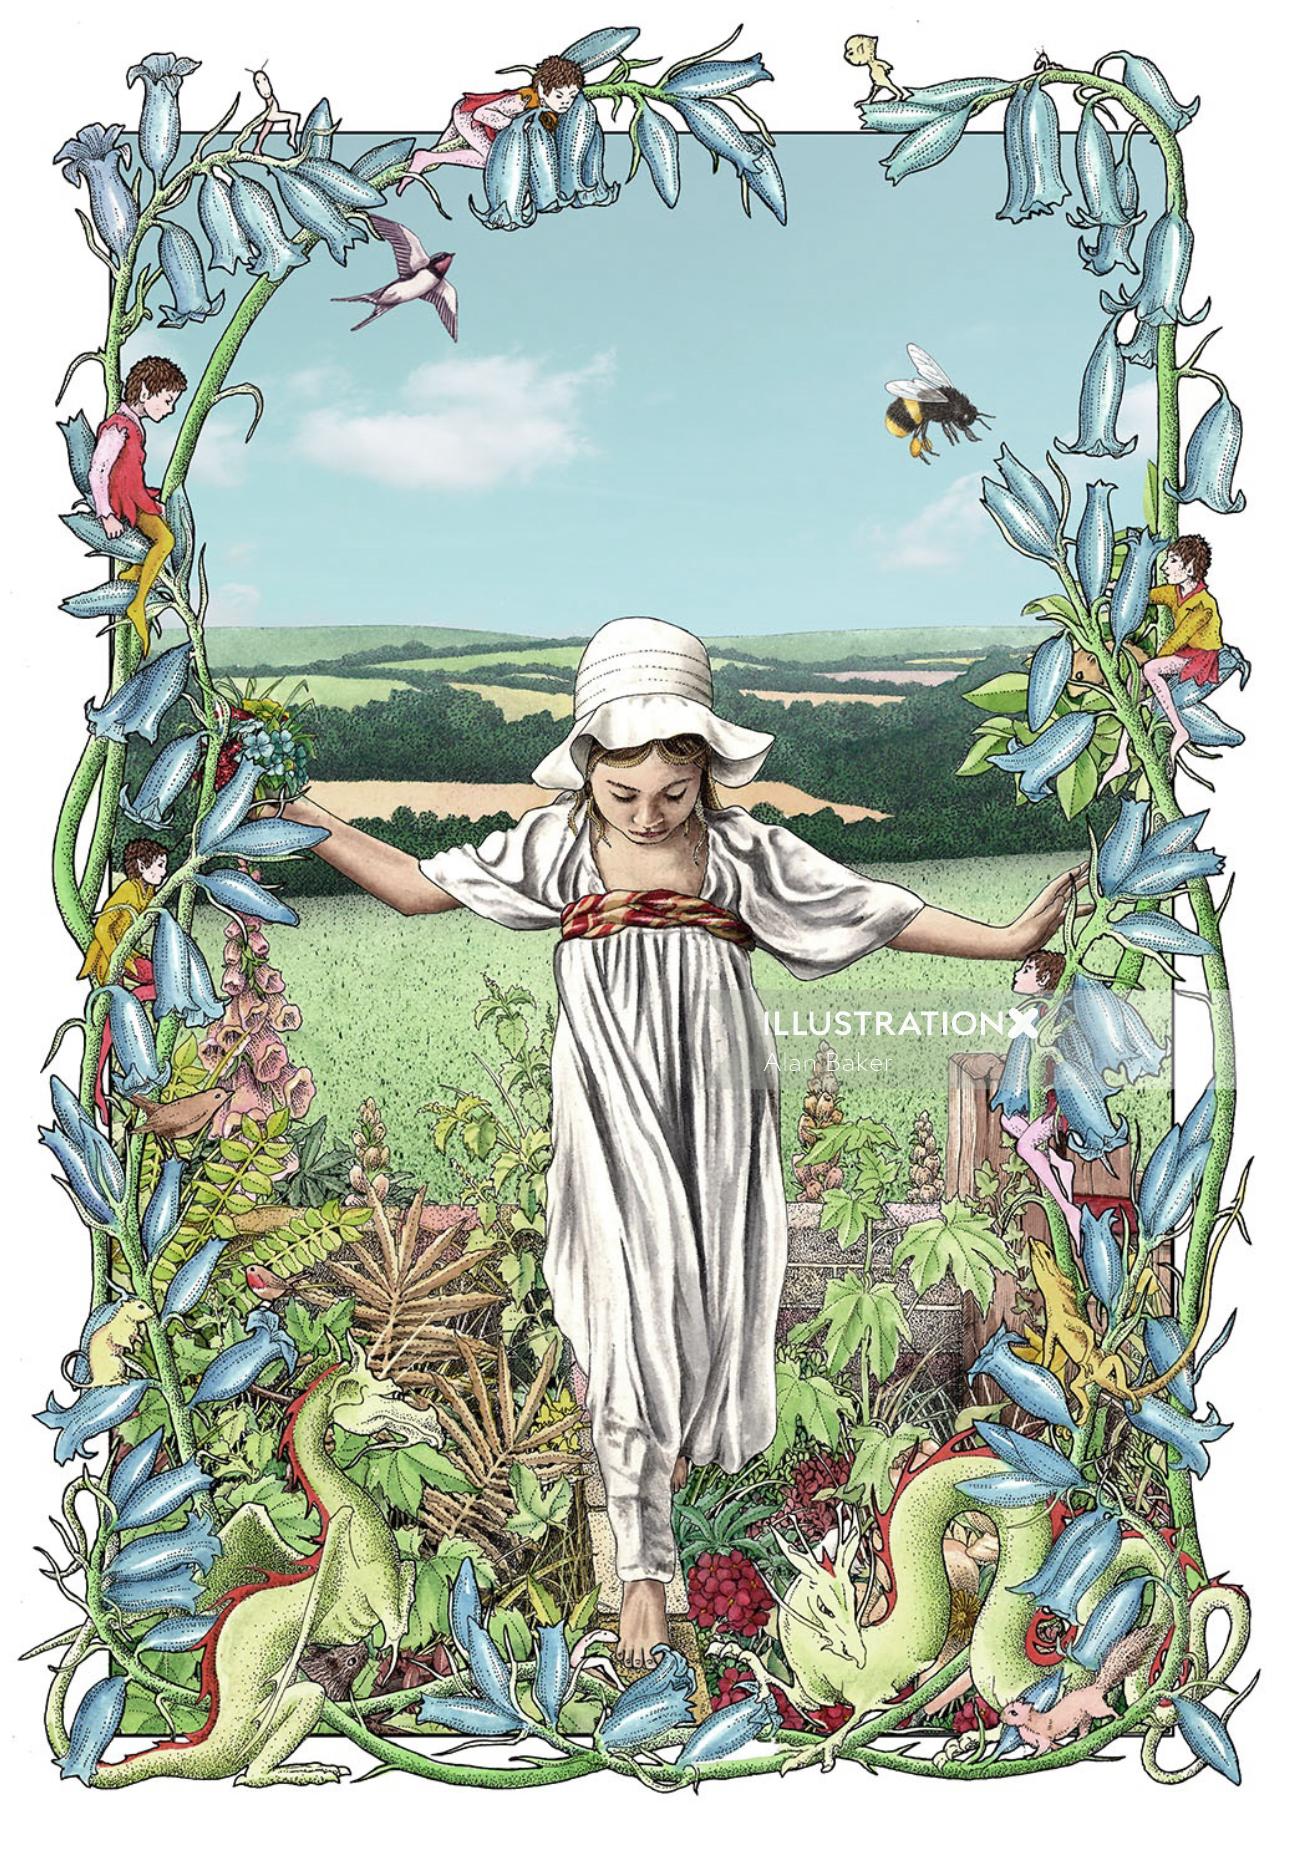 Girl in a garden - An illustration by Alan Baker